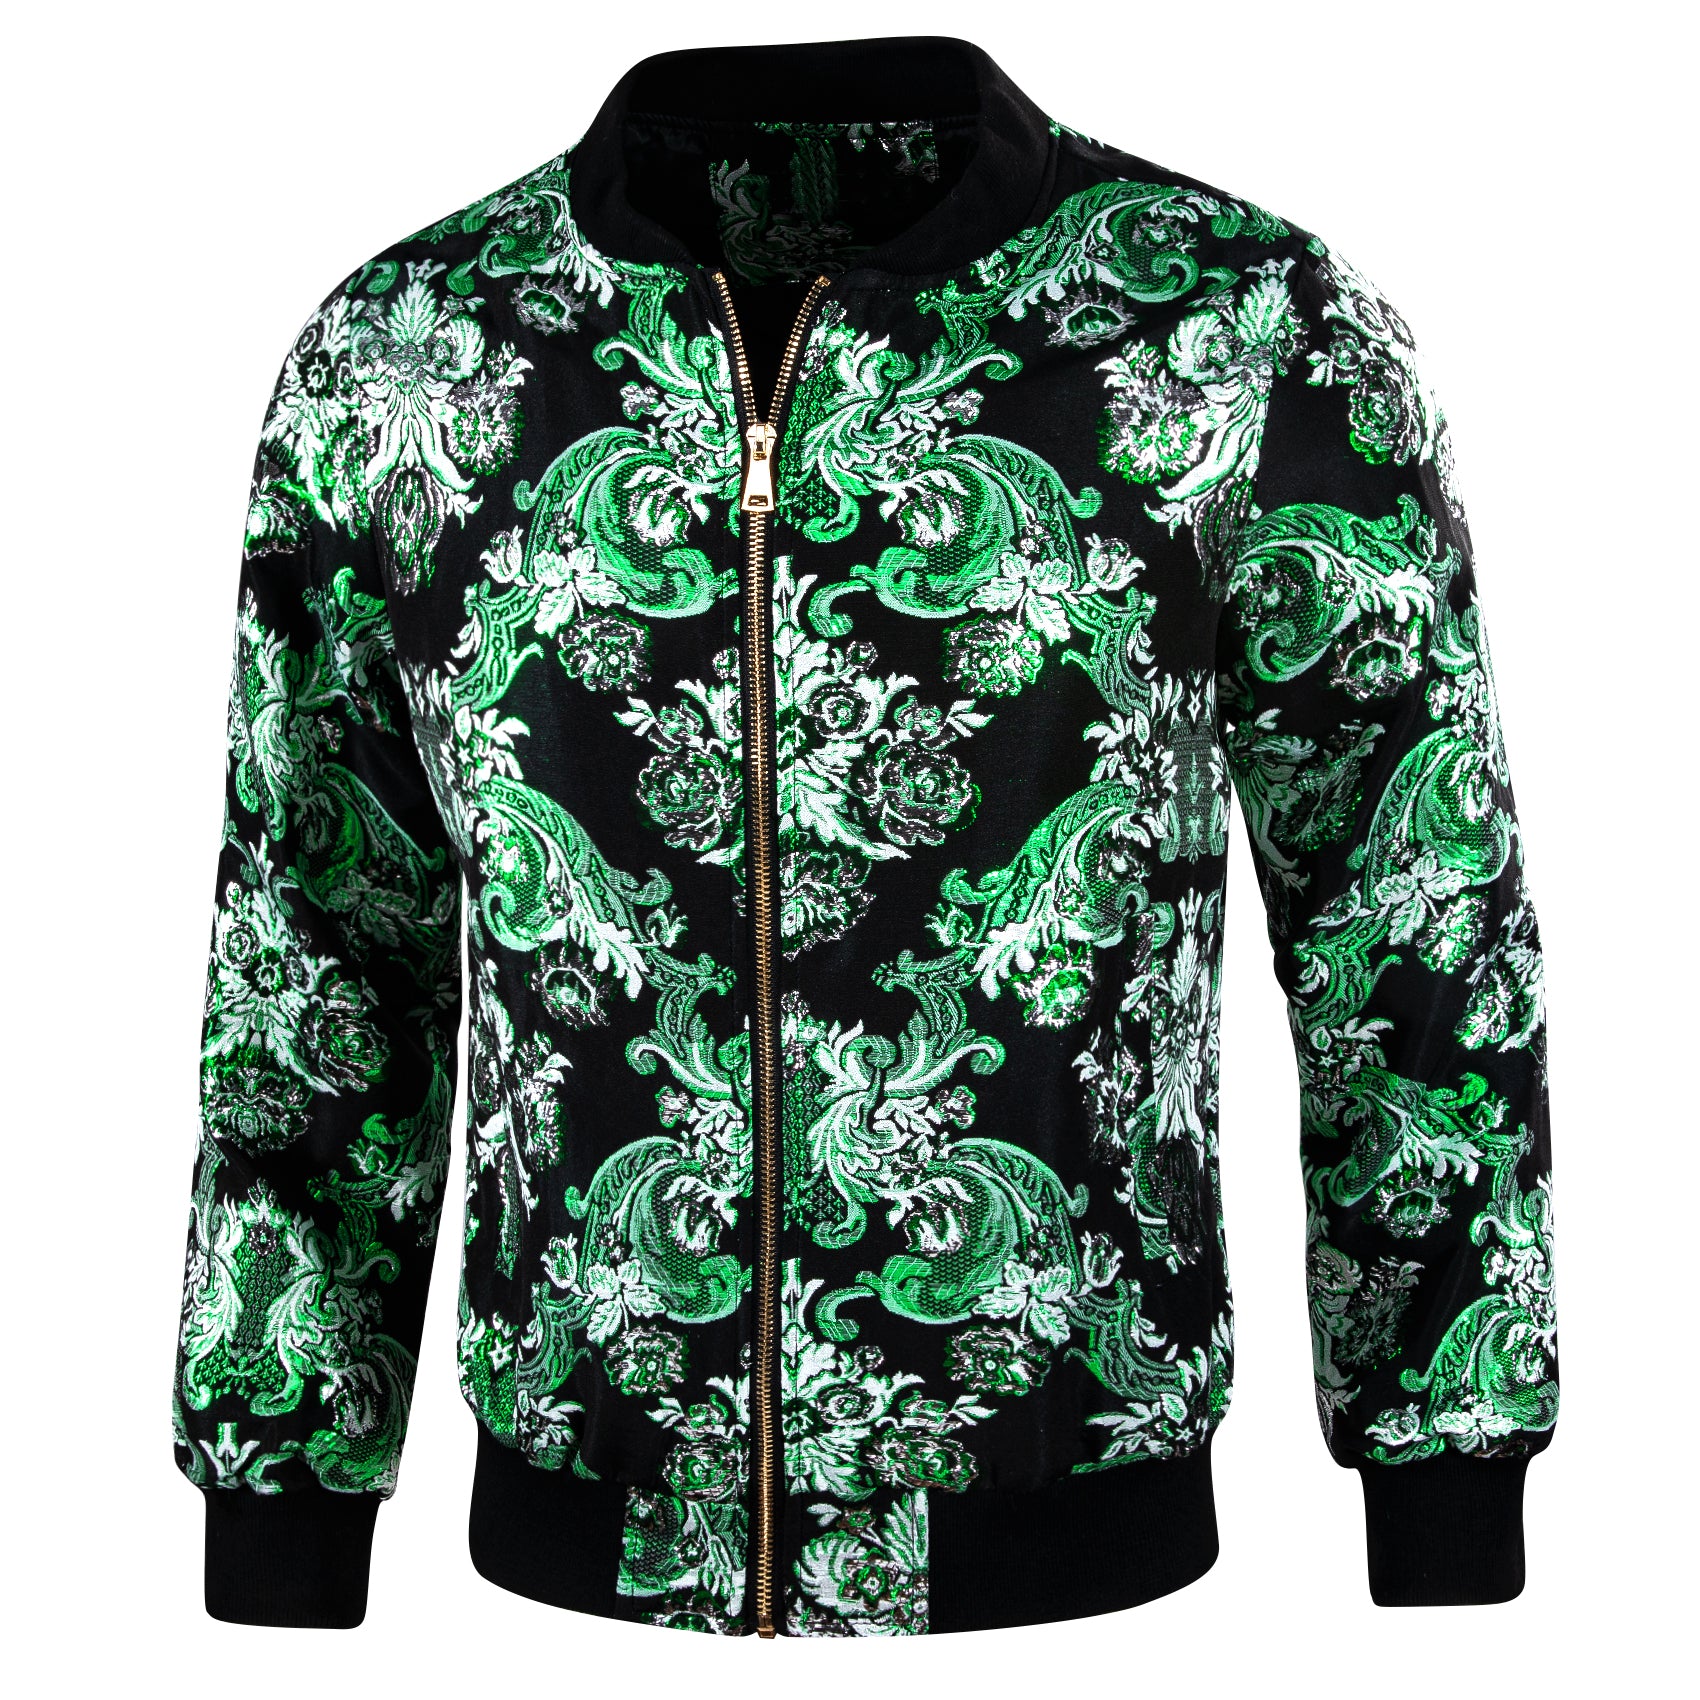 Barry.wang Zipper Jacket Men's Green White Floral Jacquard Paisley Jacket